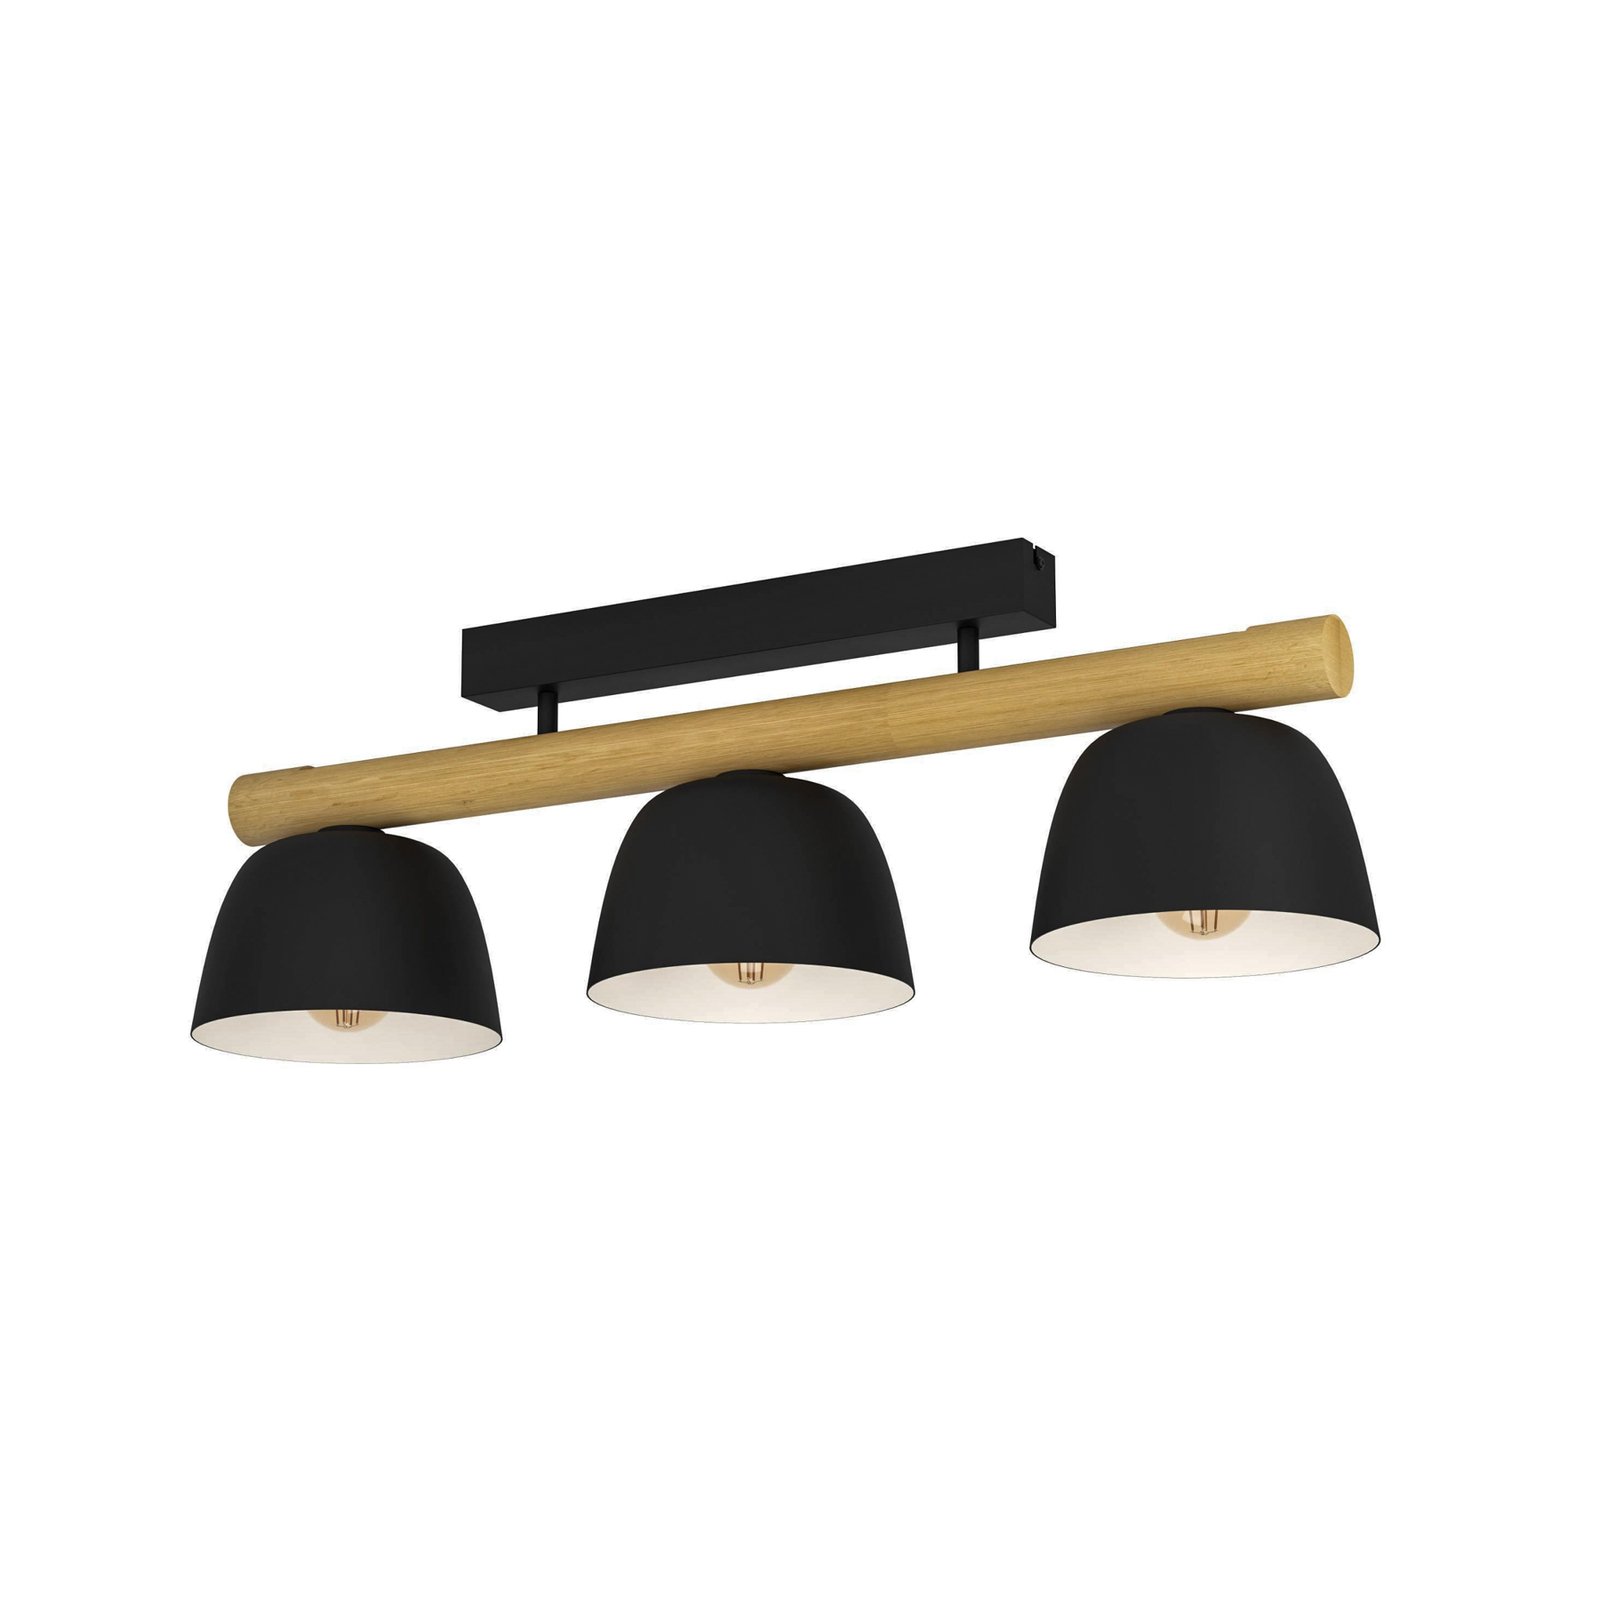 Sherburn plafondlamp, lengte 80 cm, zwart/bruin, 3-lamps.